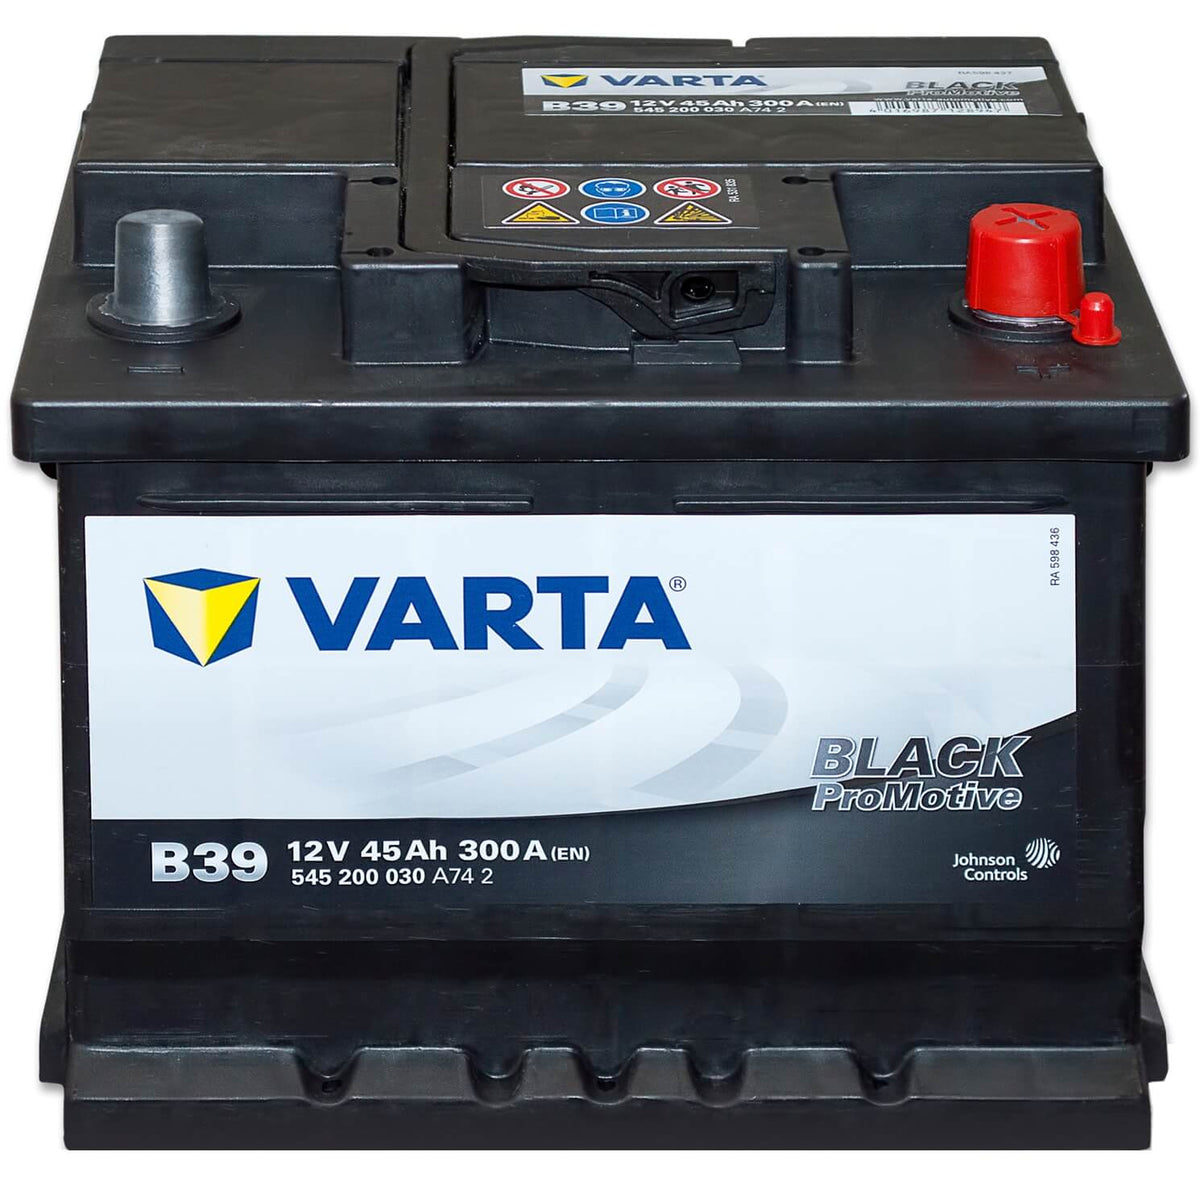 Varta B39 Promotive Black 12V 45Ah 300A/EN